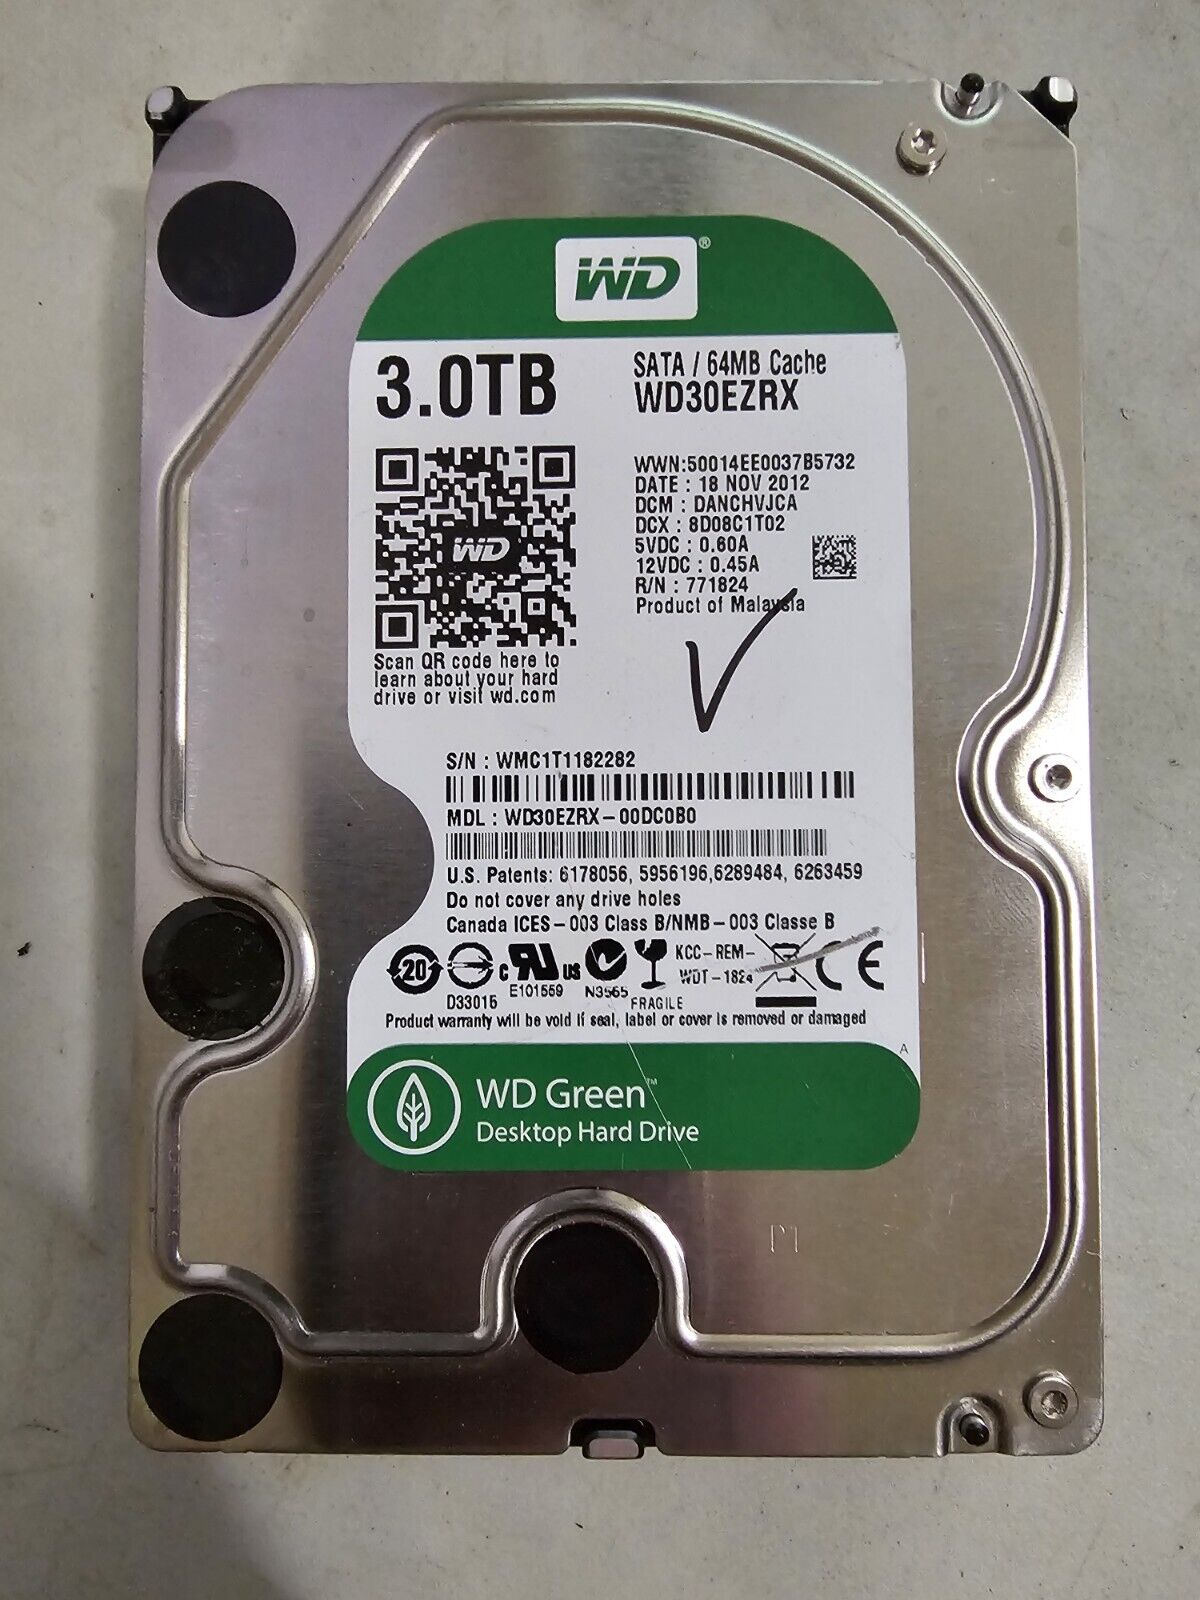 Western Digital WD Green 3.0TB Internal Desktop Hard Drive (WD30EZRX) Tested